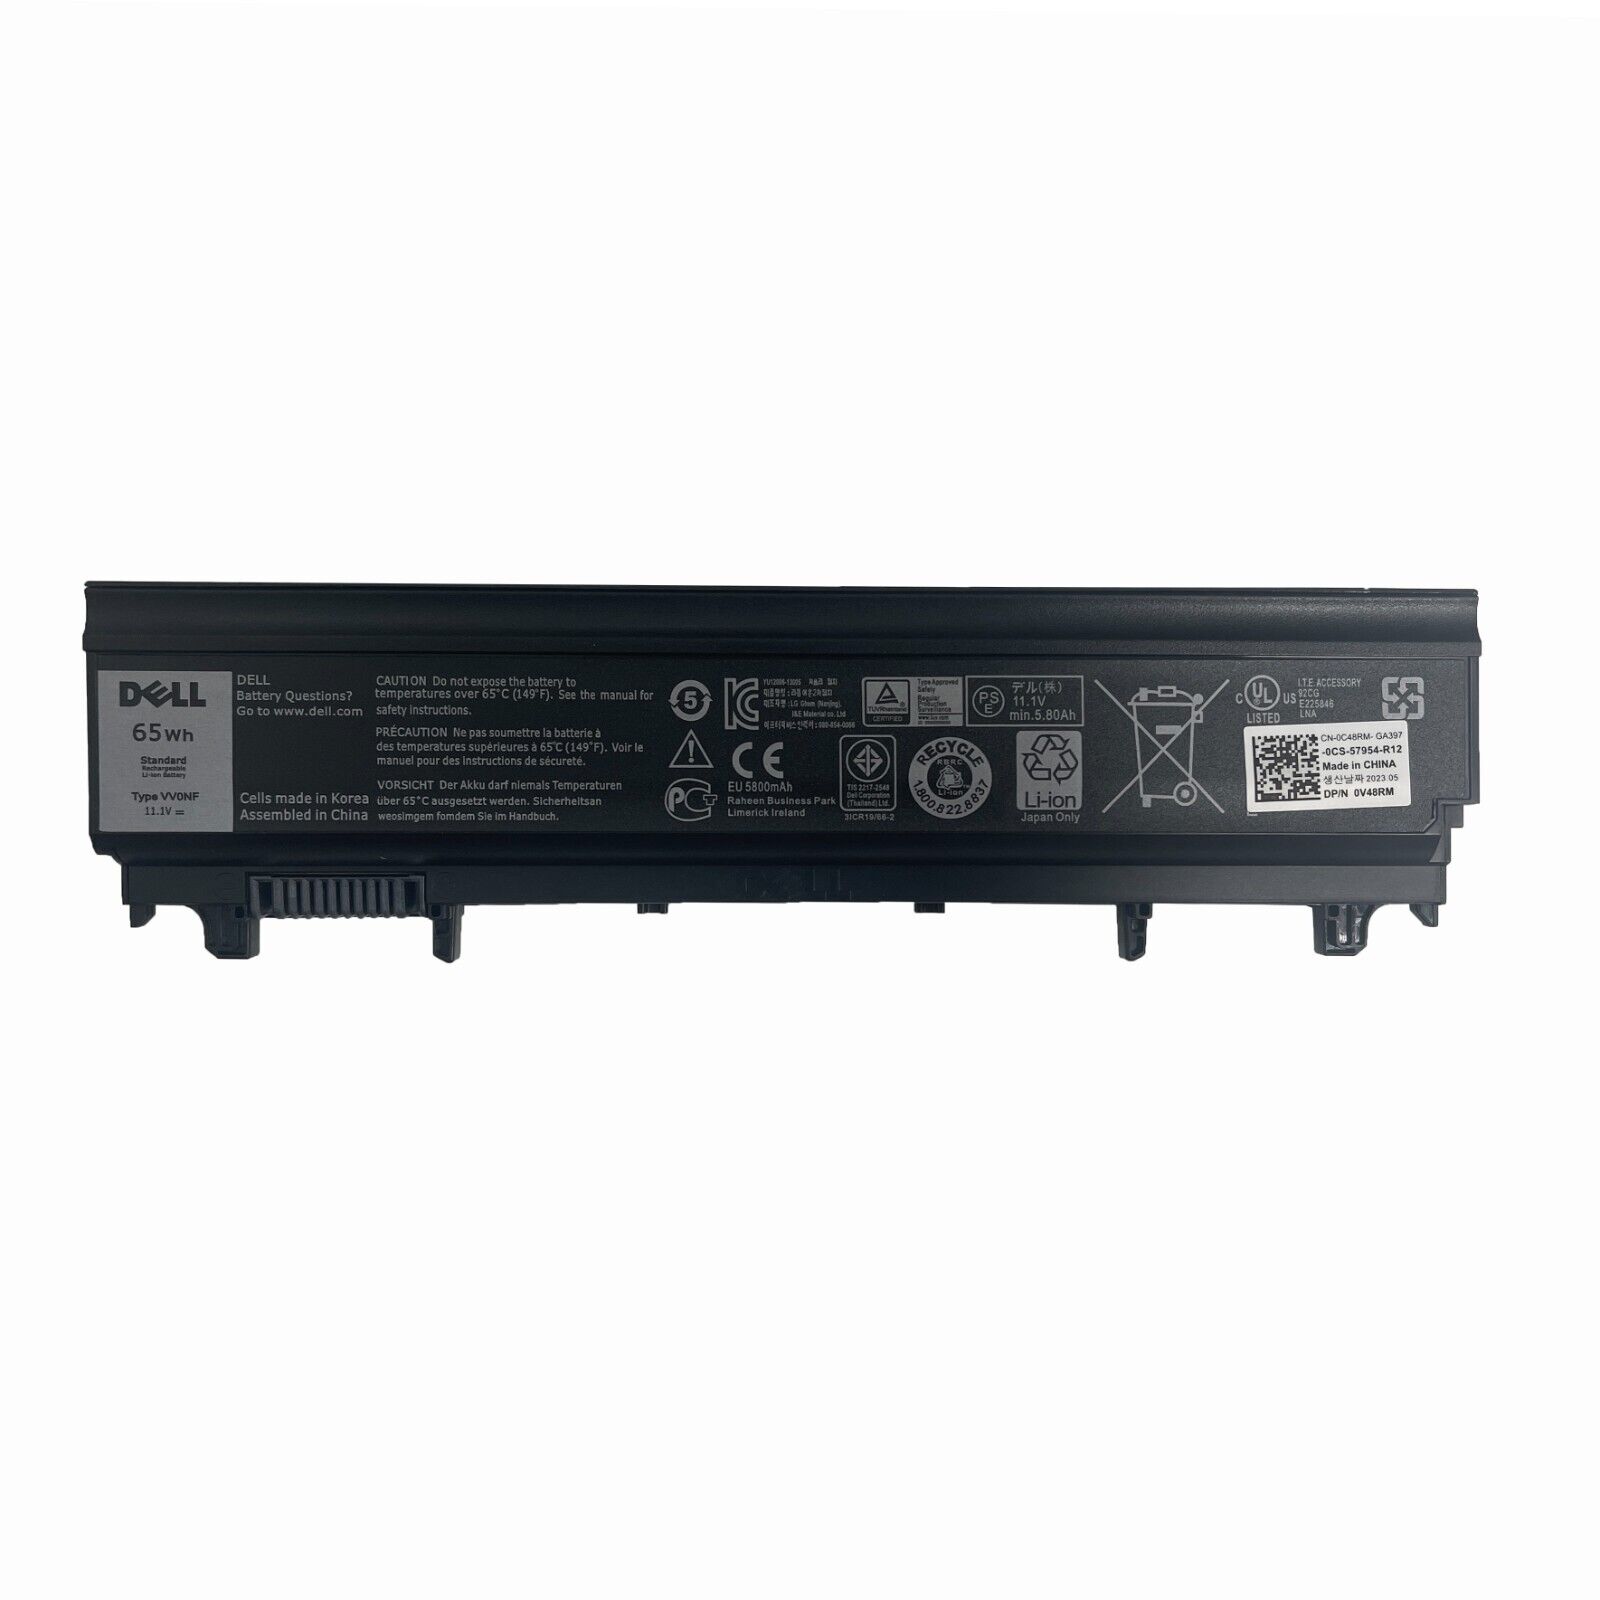 Genuine 65Wh VV0NF Battery For Dell Latitude E5540 E5440 451-BBIE WGCW6 N5YH9